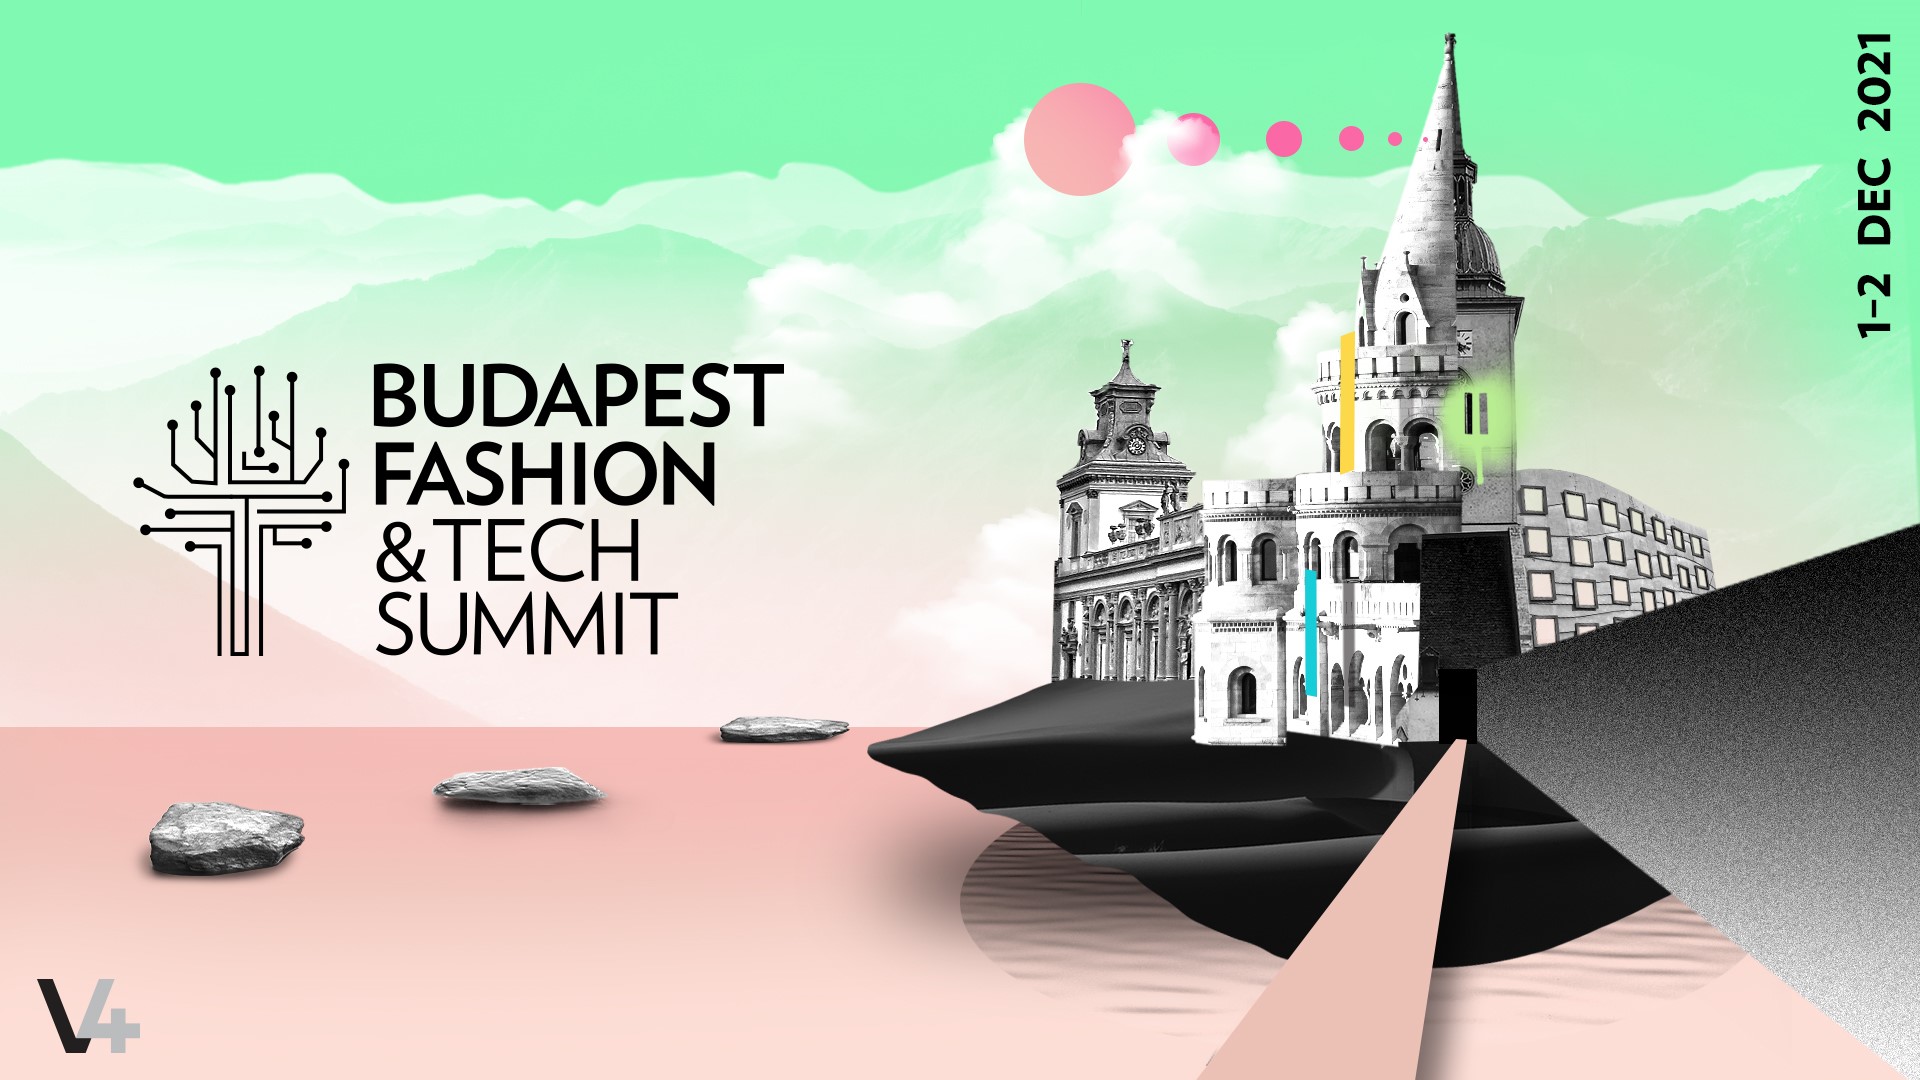 Budapest Fashion & Tech Summit, 1 - 2 December